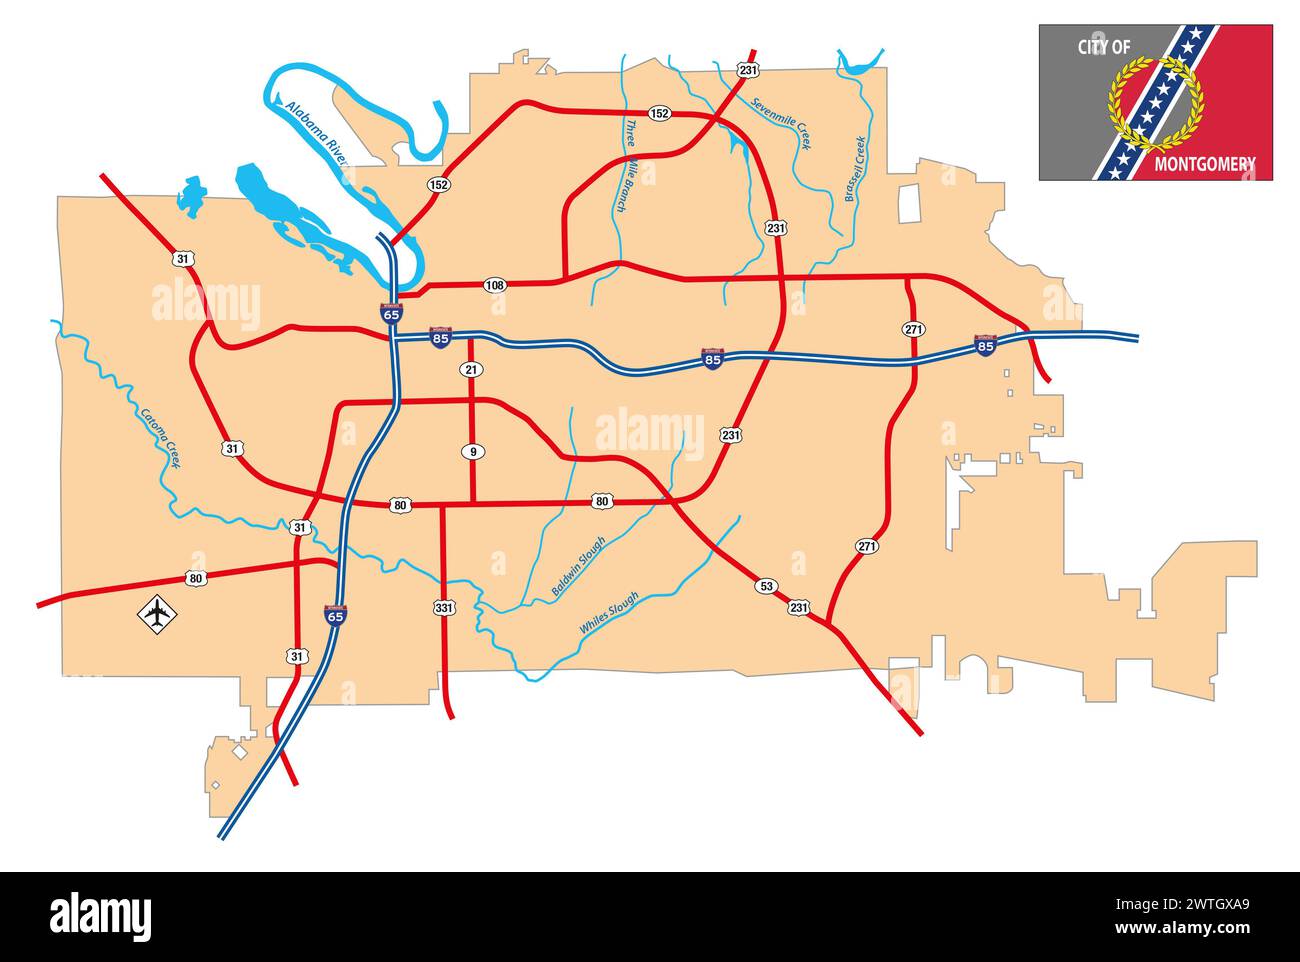 Simple city map of Montgomery, Alabama, USA Stock Photo